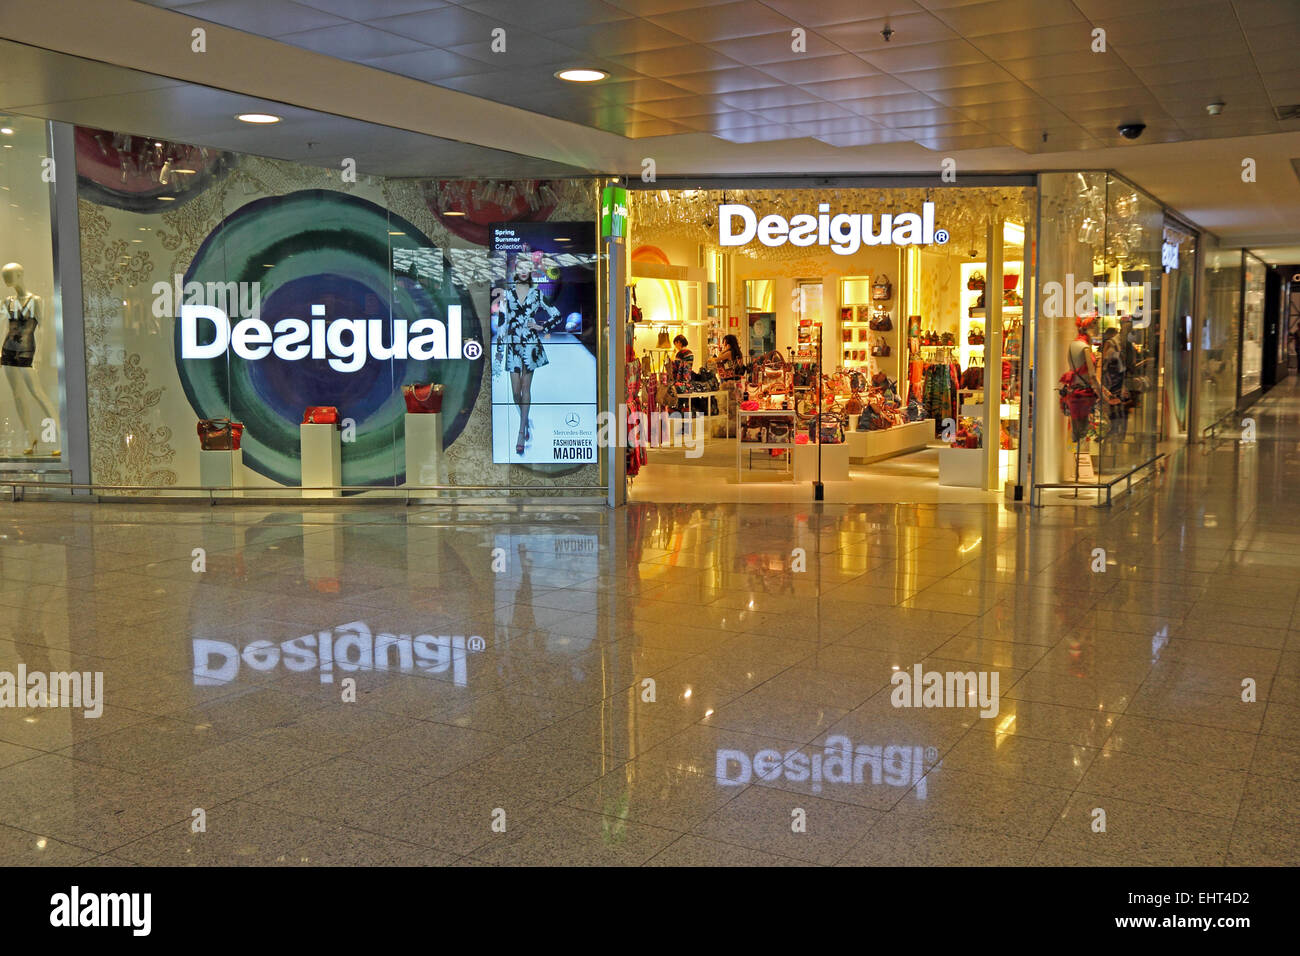 Desigual designer clothes shop, Barcelona El Prat airport Stock Photo